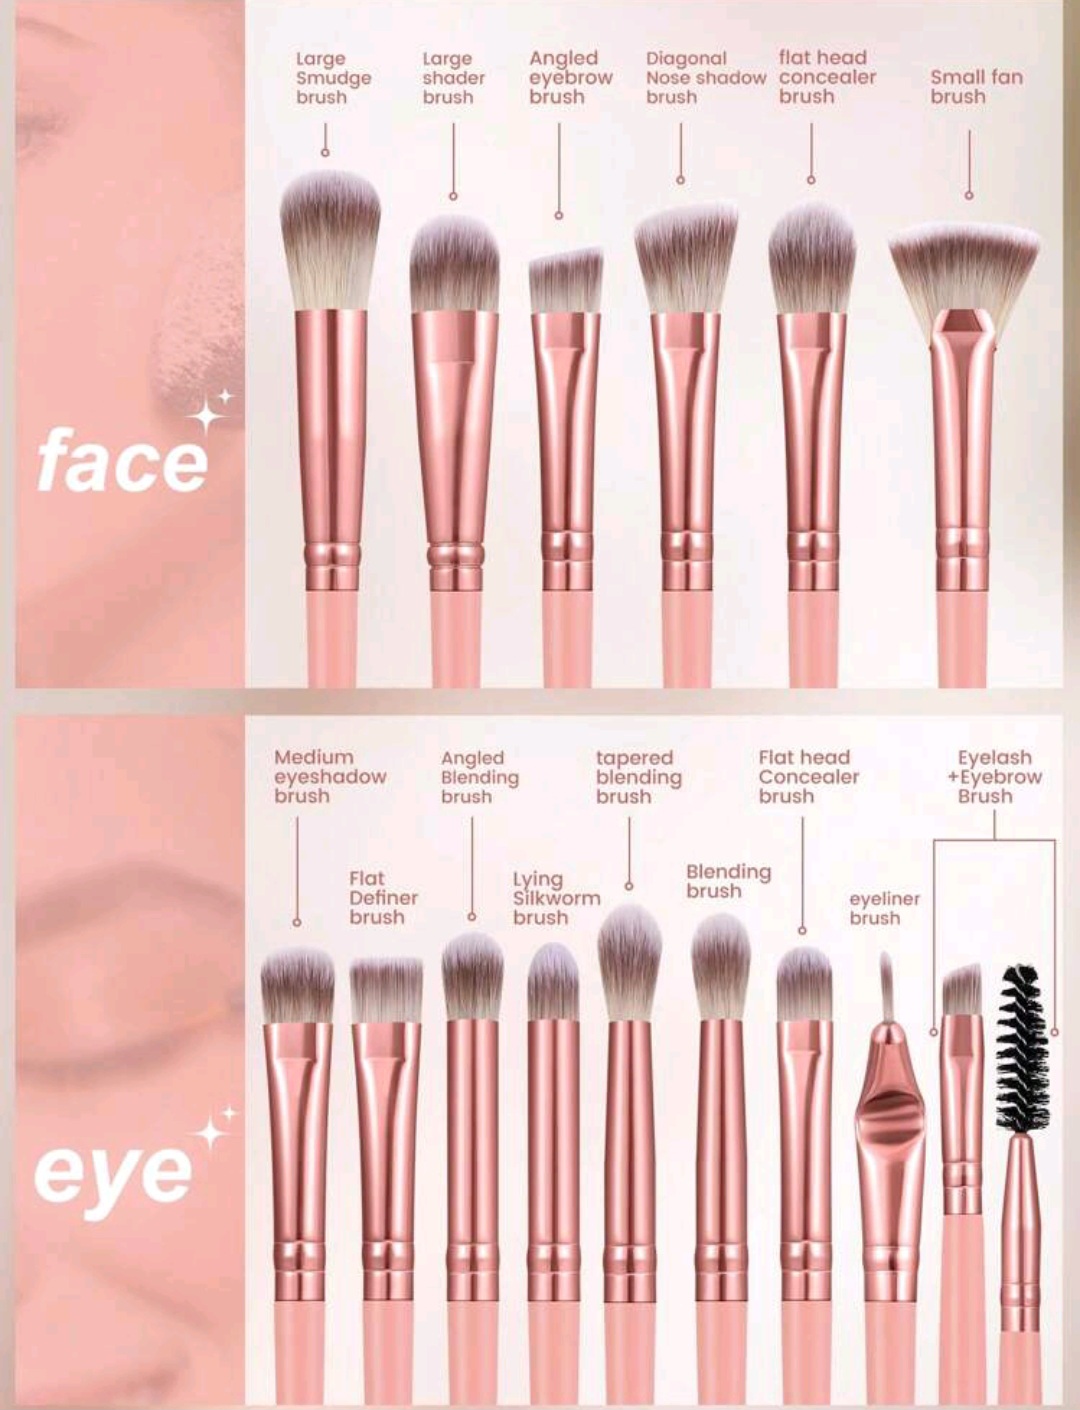 Набор кистей 15шт 15pcs makeup brush sets Premium Synthetic hair Eyeshadow Blending brush sets cosmetics tools for face and eyes Black Friday